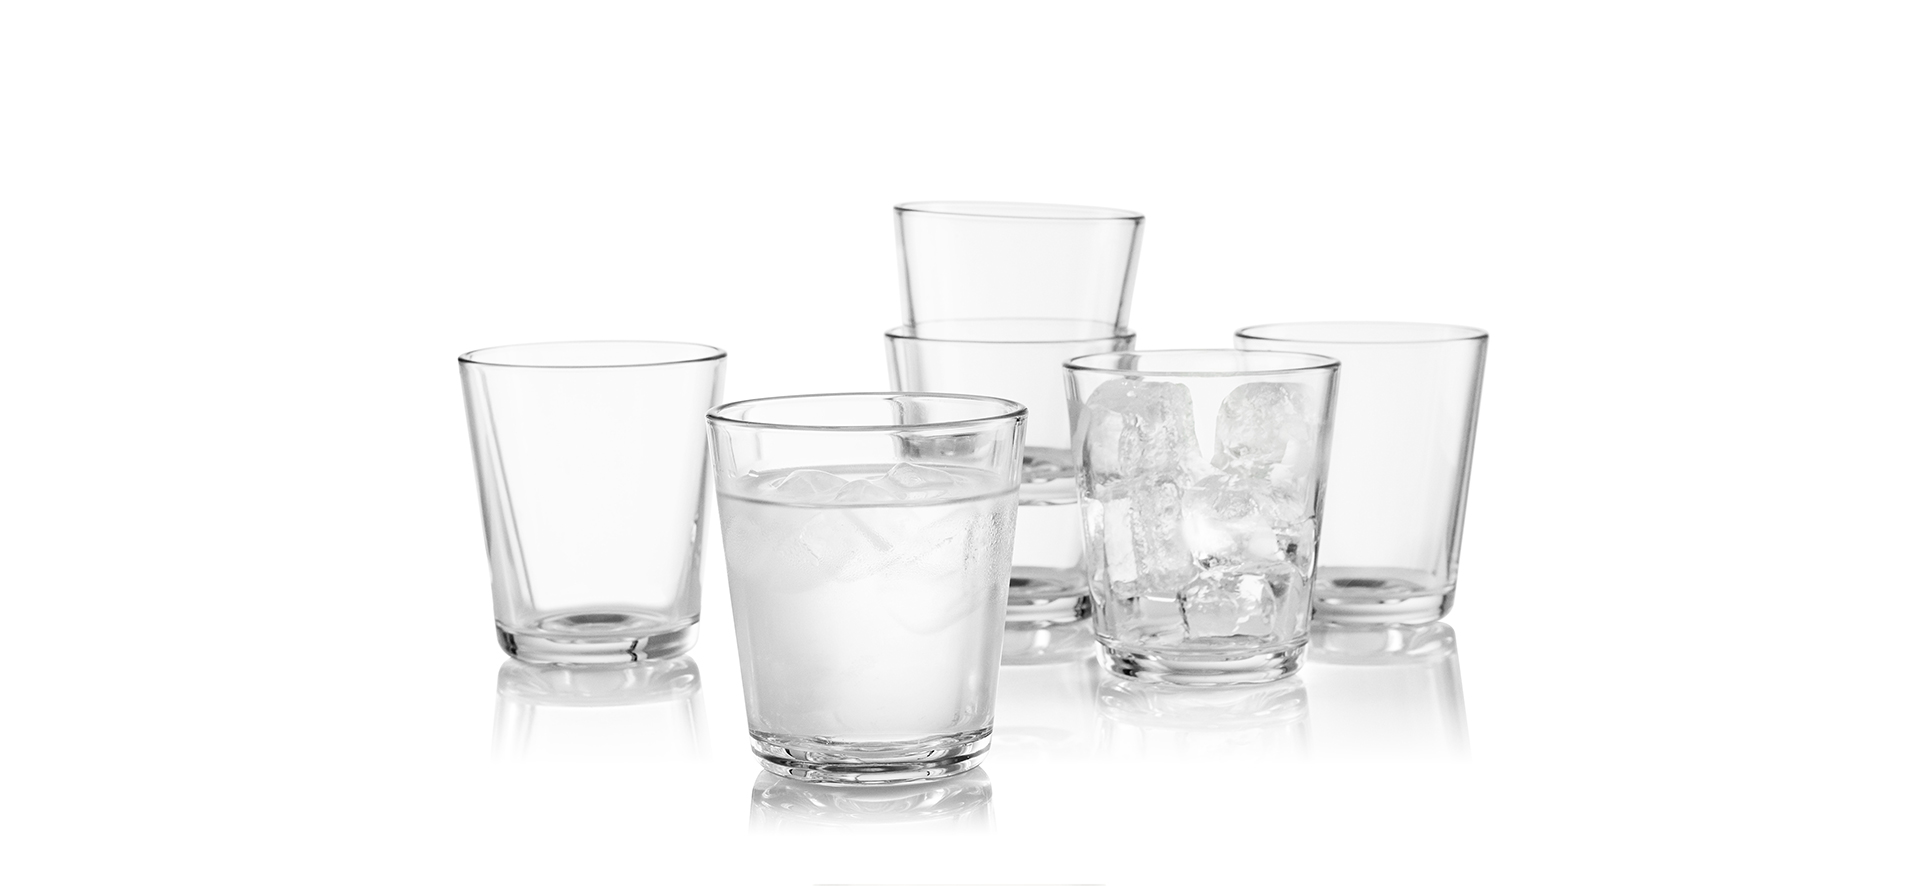 Eva Solo Vatten Dricks glas 25 cl. 12-pack